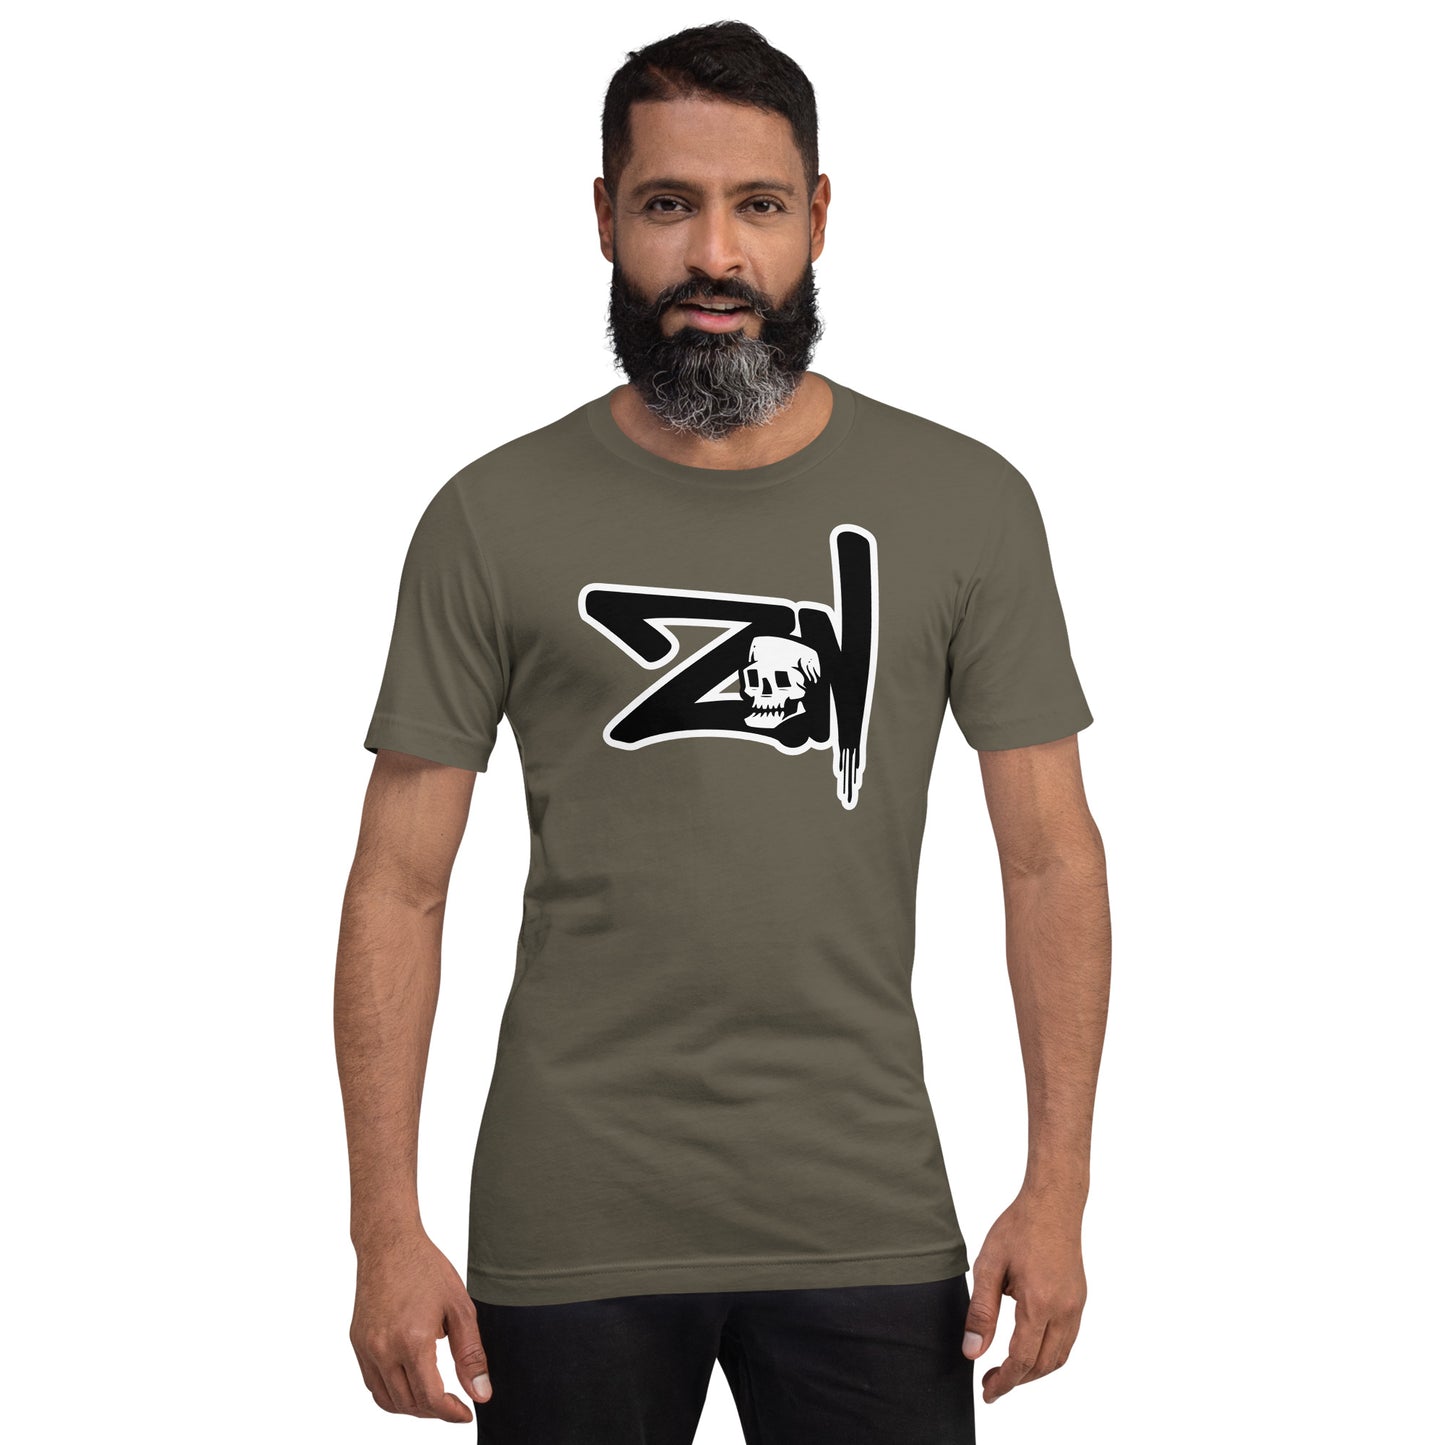 ZON Skull logo Unisex t-shirt